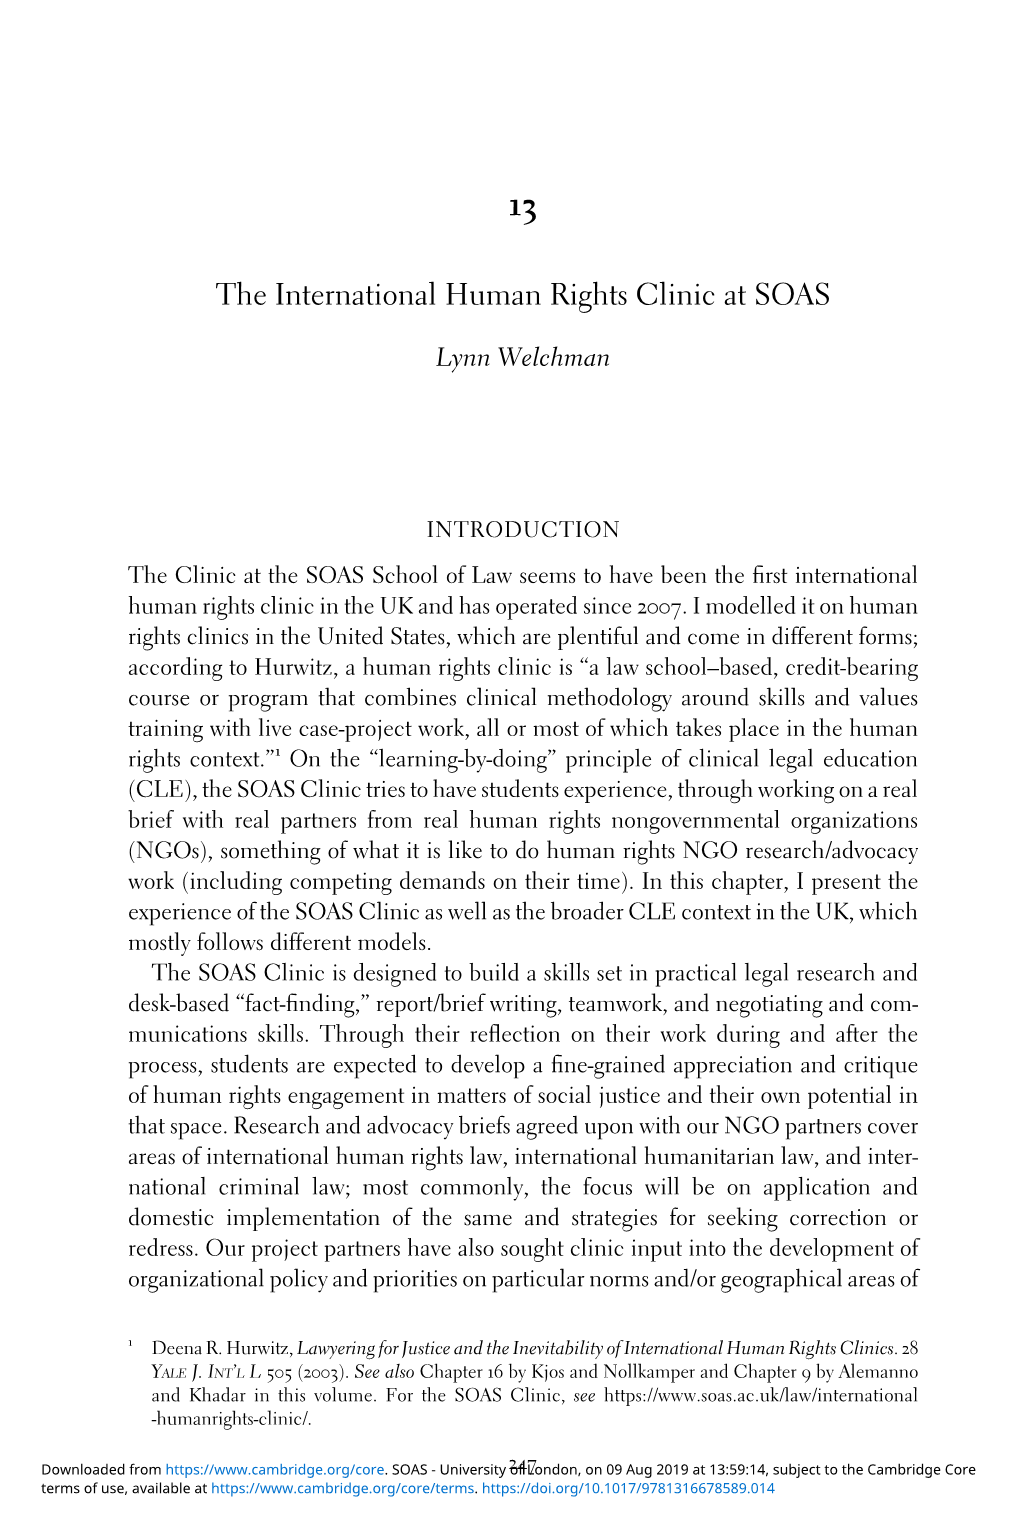 The International Human Rights Clinic at SOAS